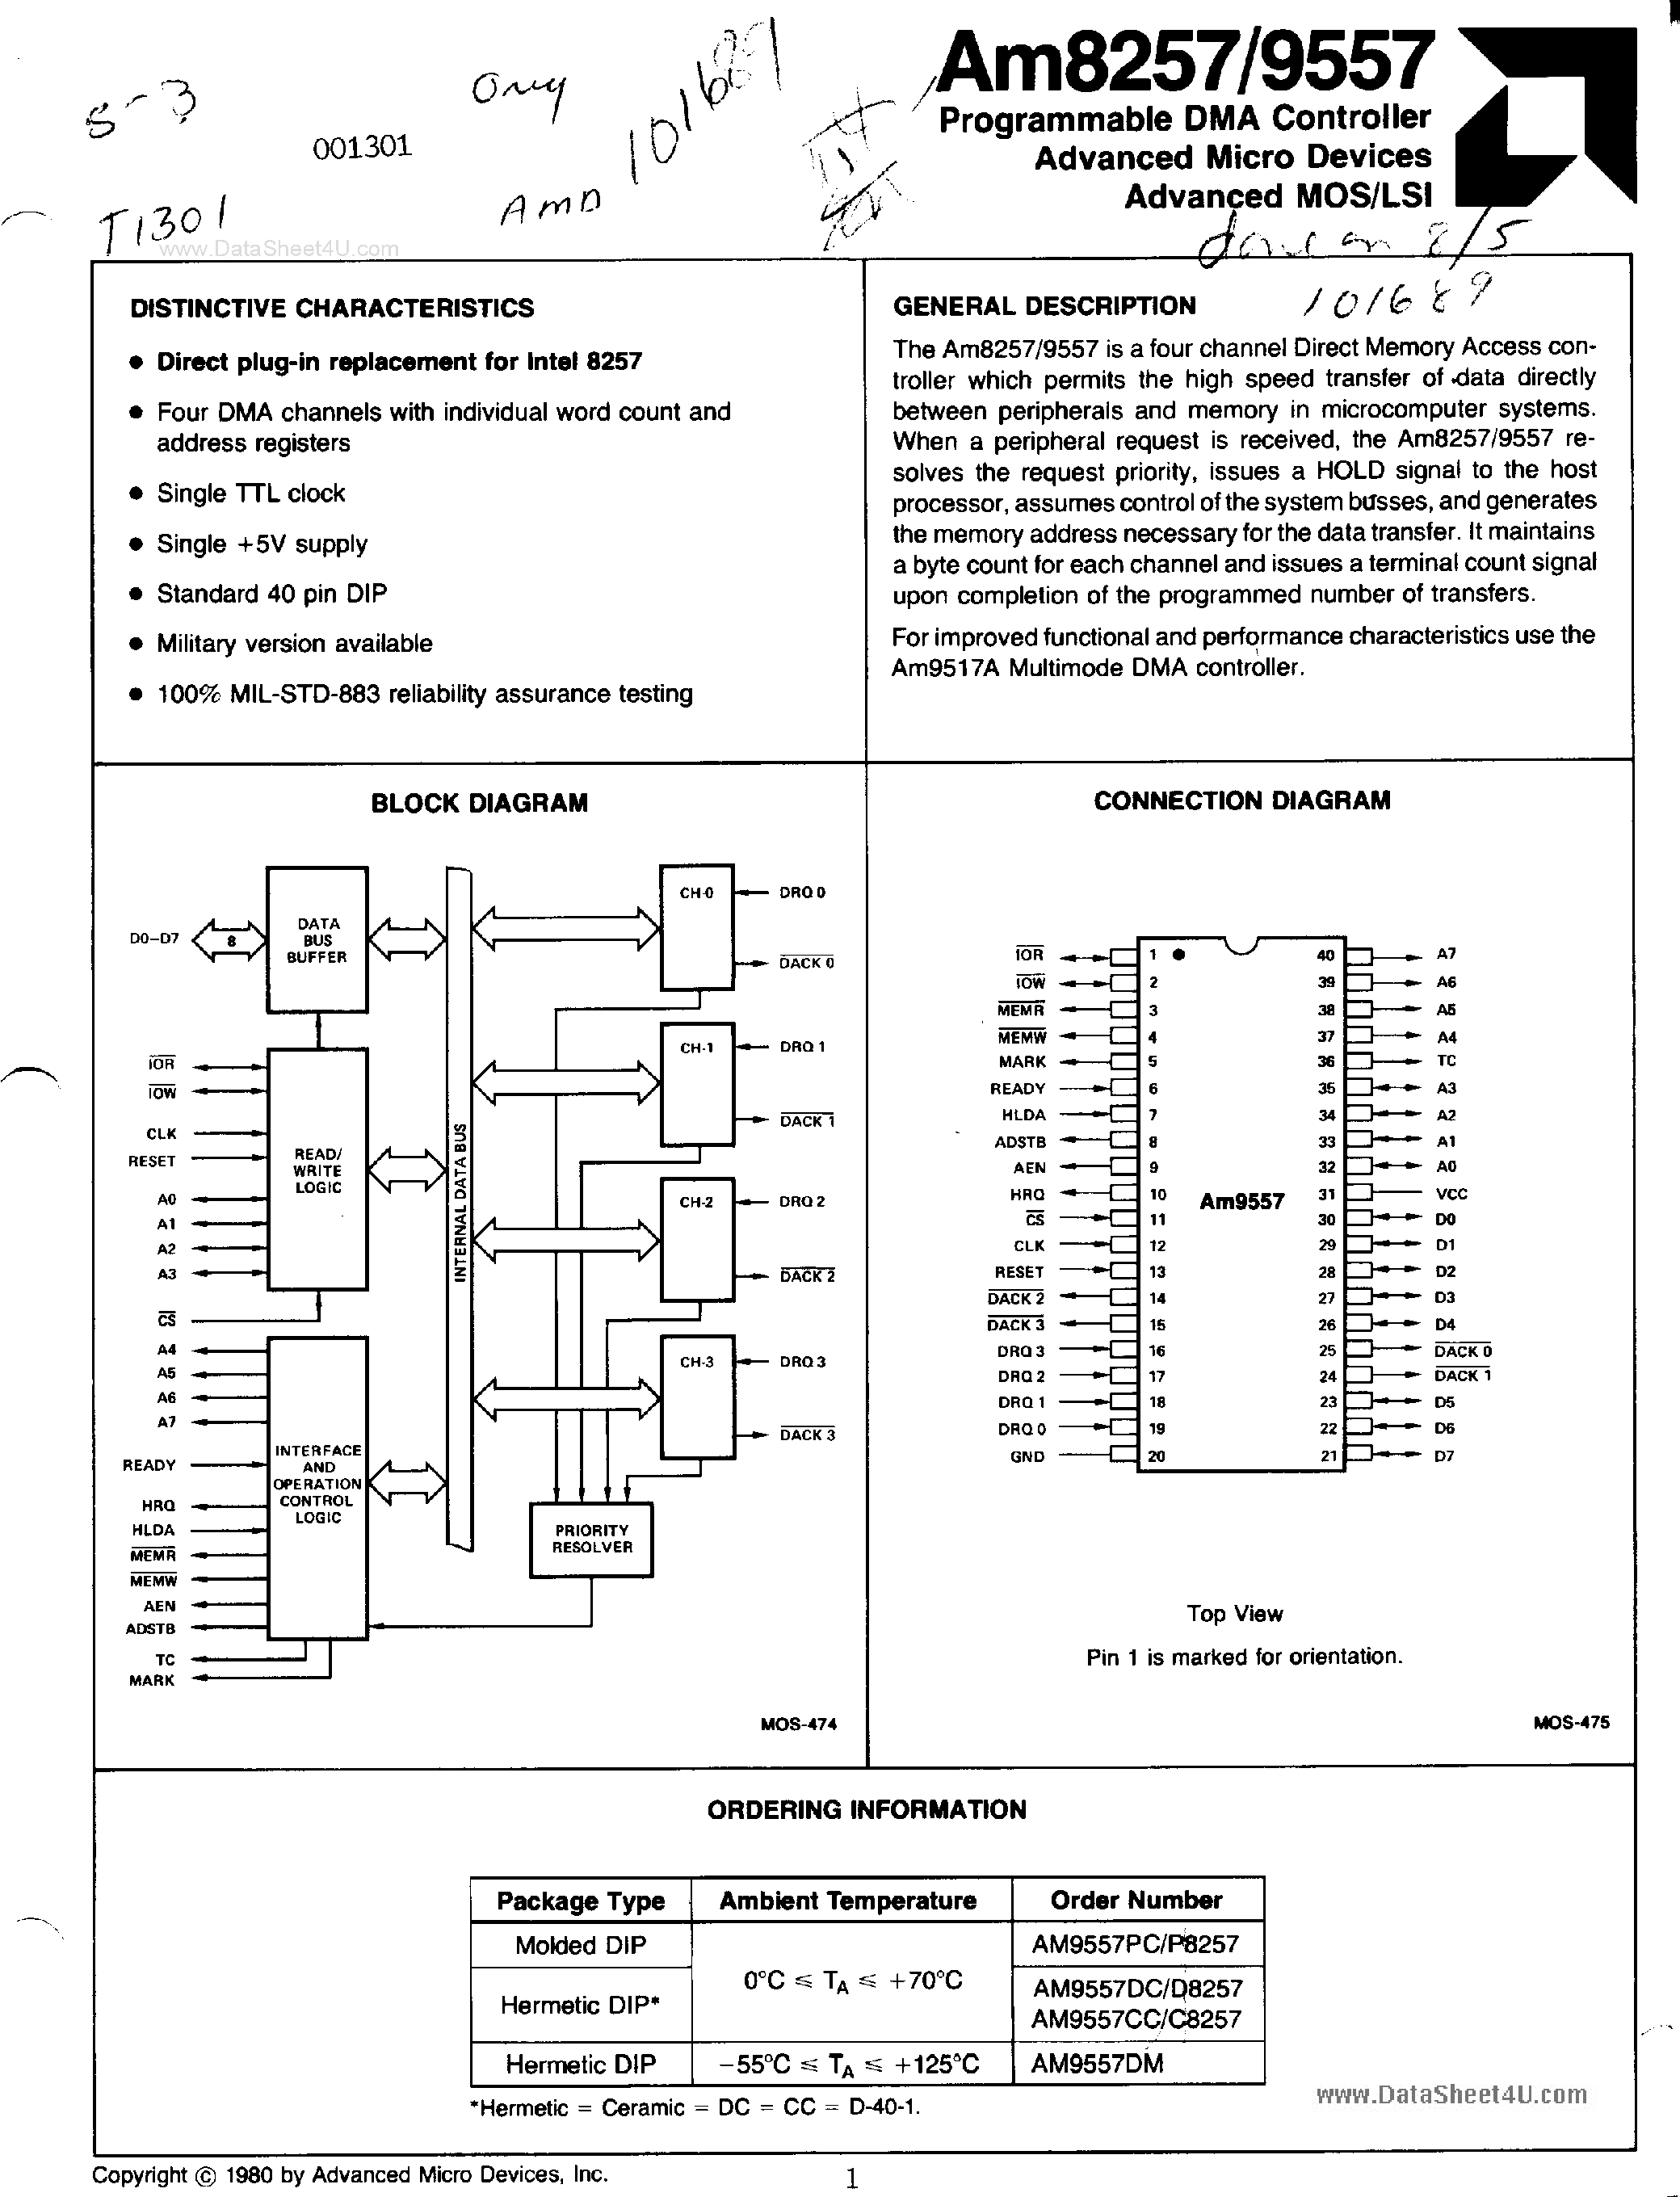 Datasheet AM9557 - (AM9557 / AM8257) Programmable DMA Controller page 1